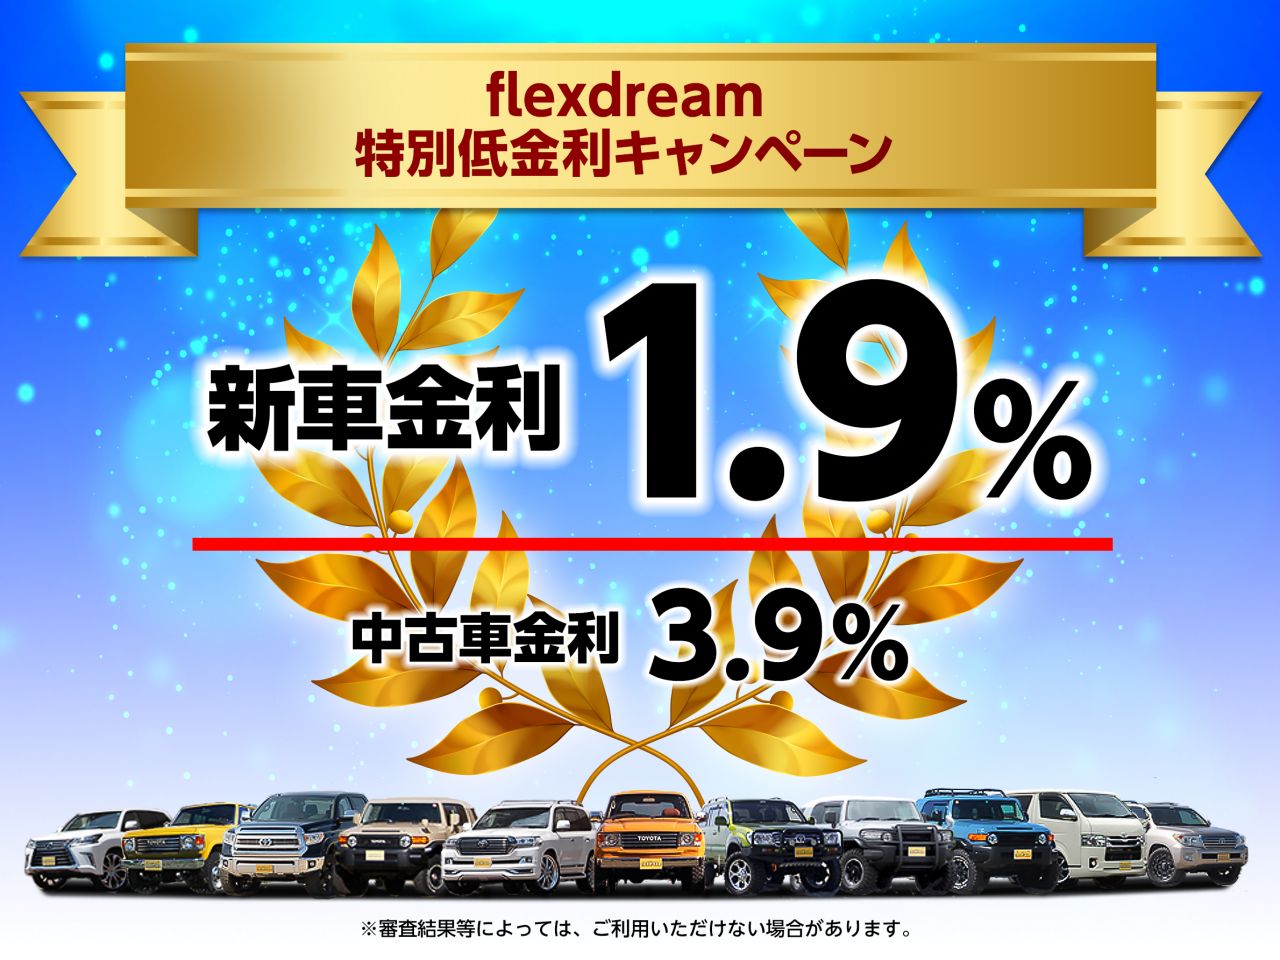 Flexdream 特別低金利キャンペーン Usトヨタ逆輸入車専門店のカスタムビークル Flexdream Blog